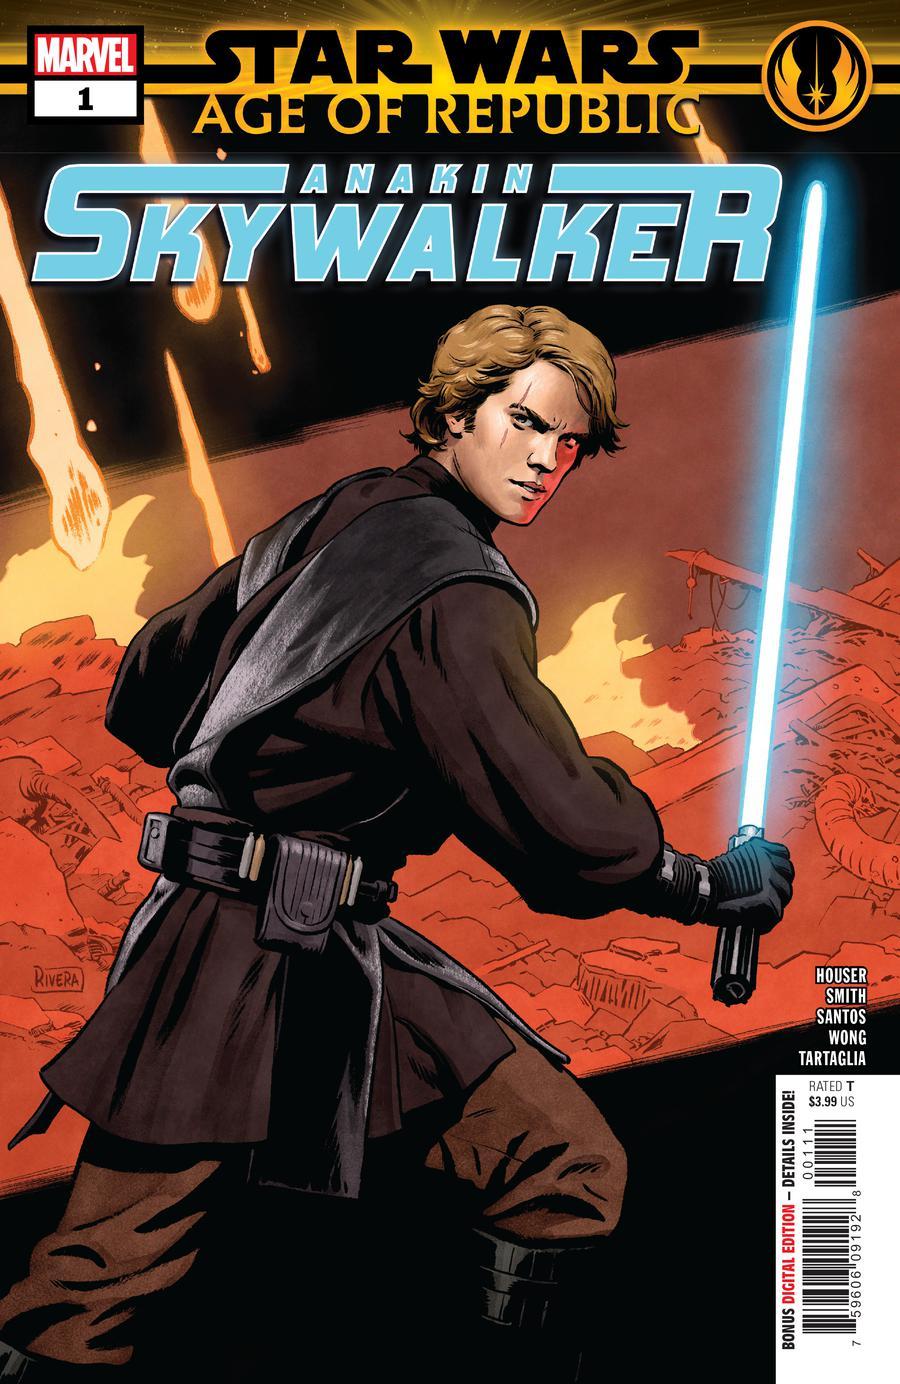 Star Wars Age Of Republic Anakin Skywalker Vol. 1 #1